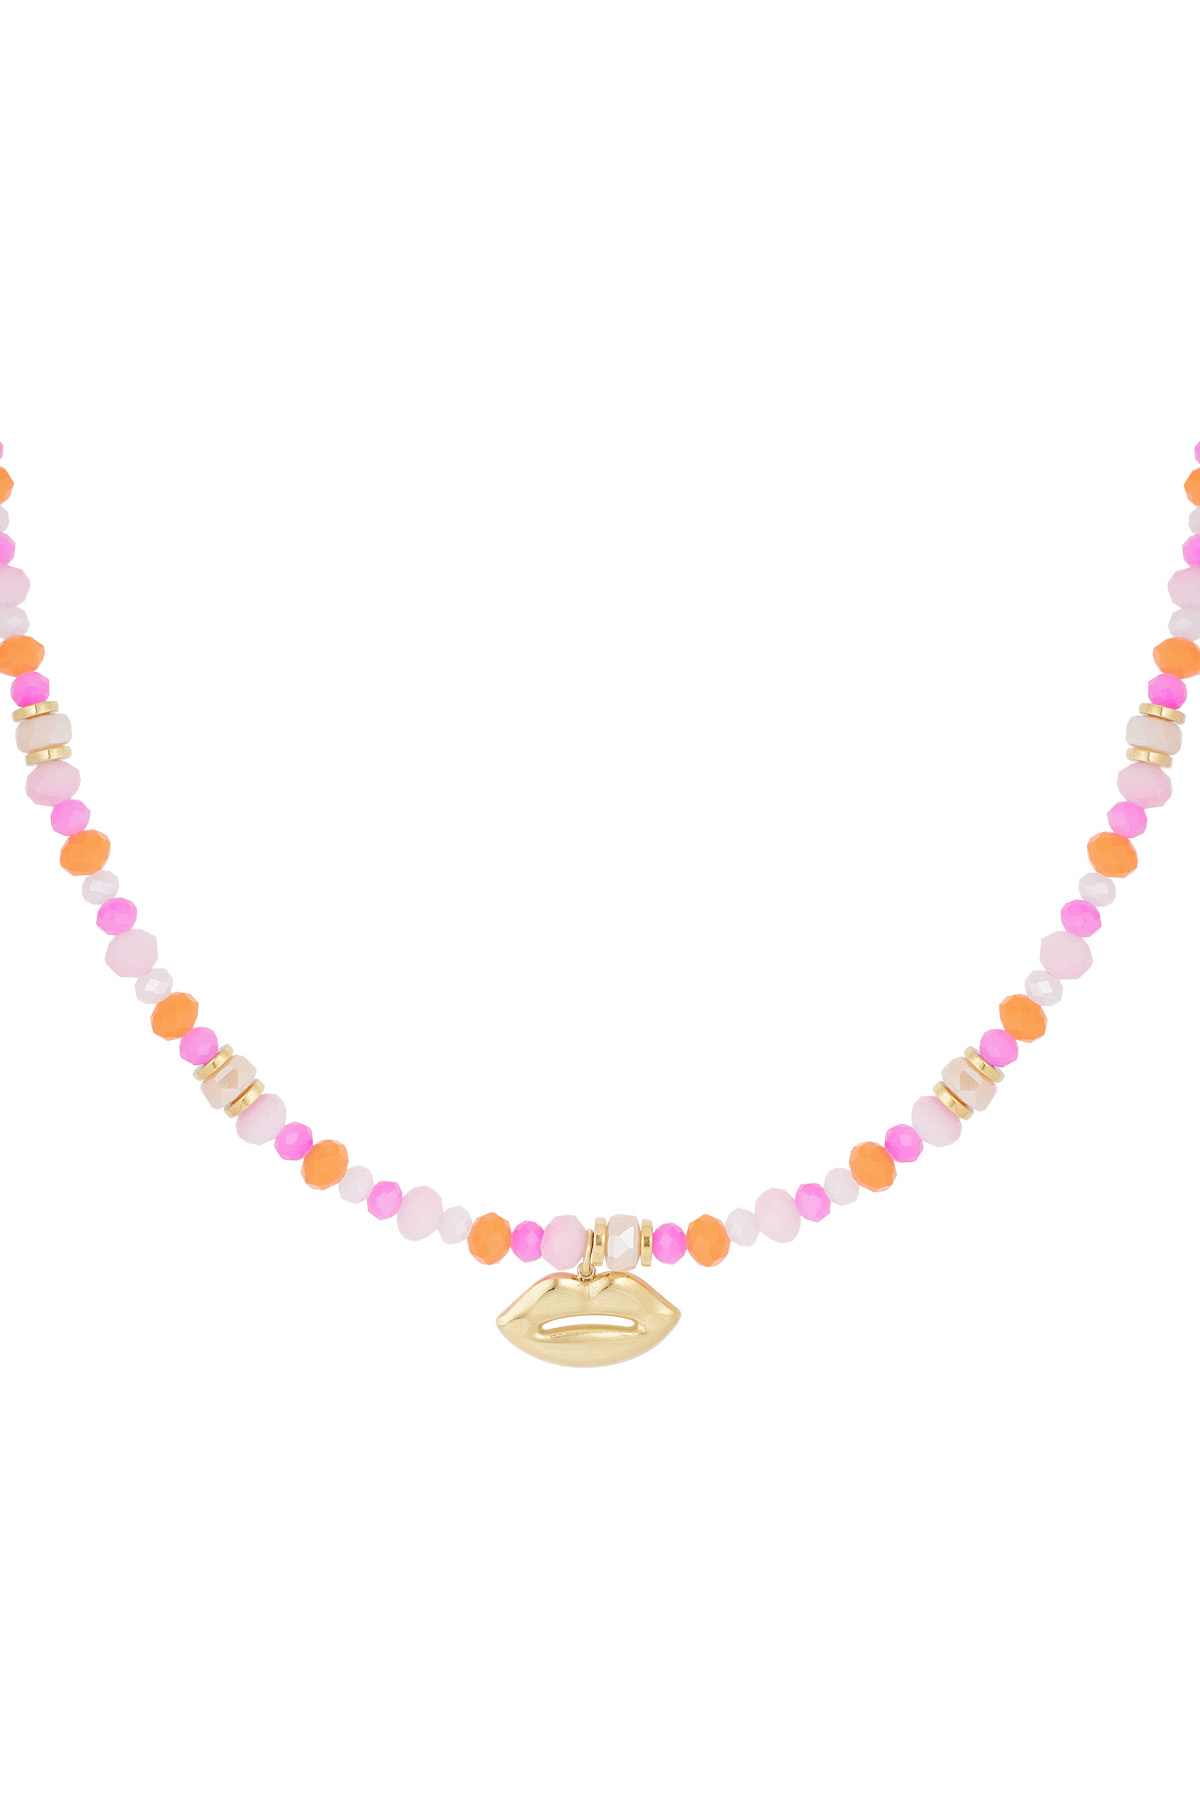 Colorful necklace joyful kiss - pink gold